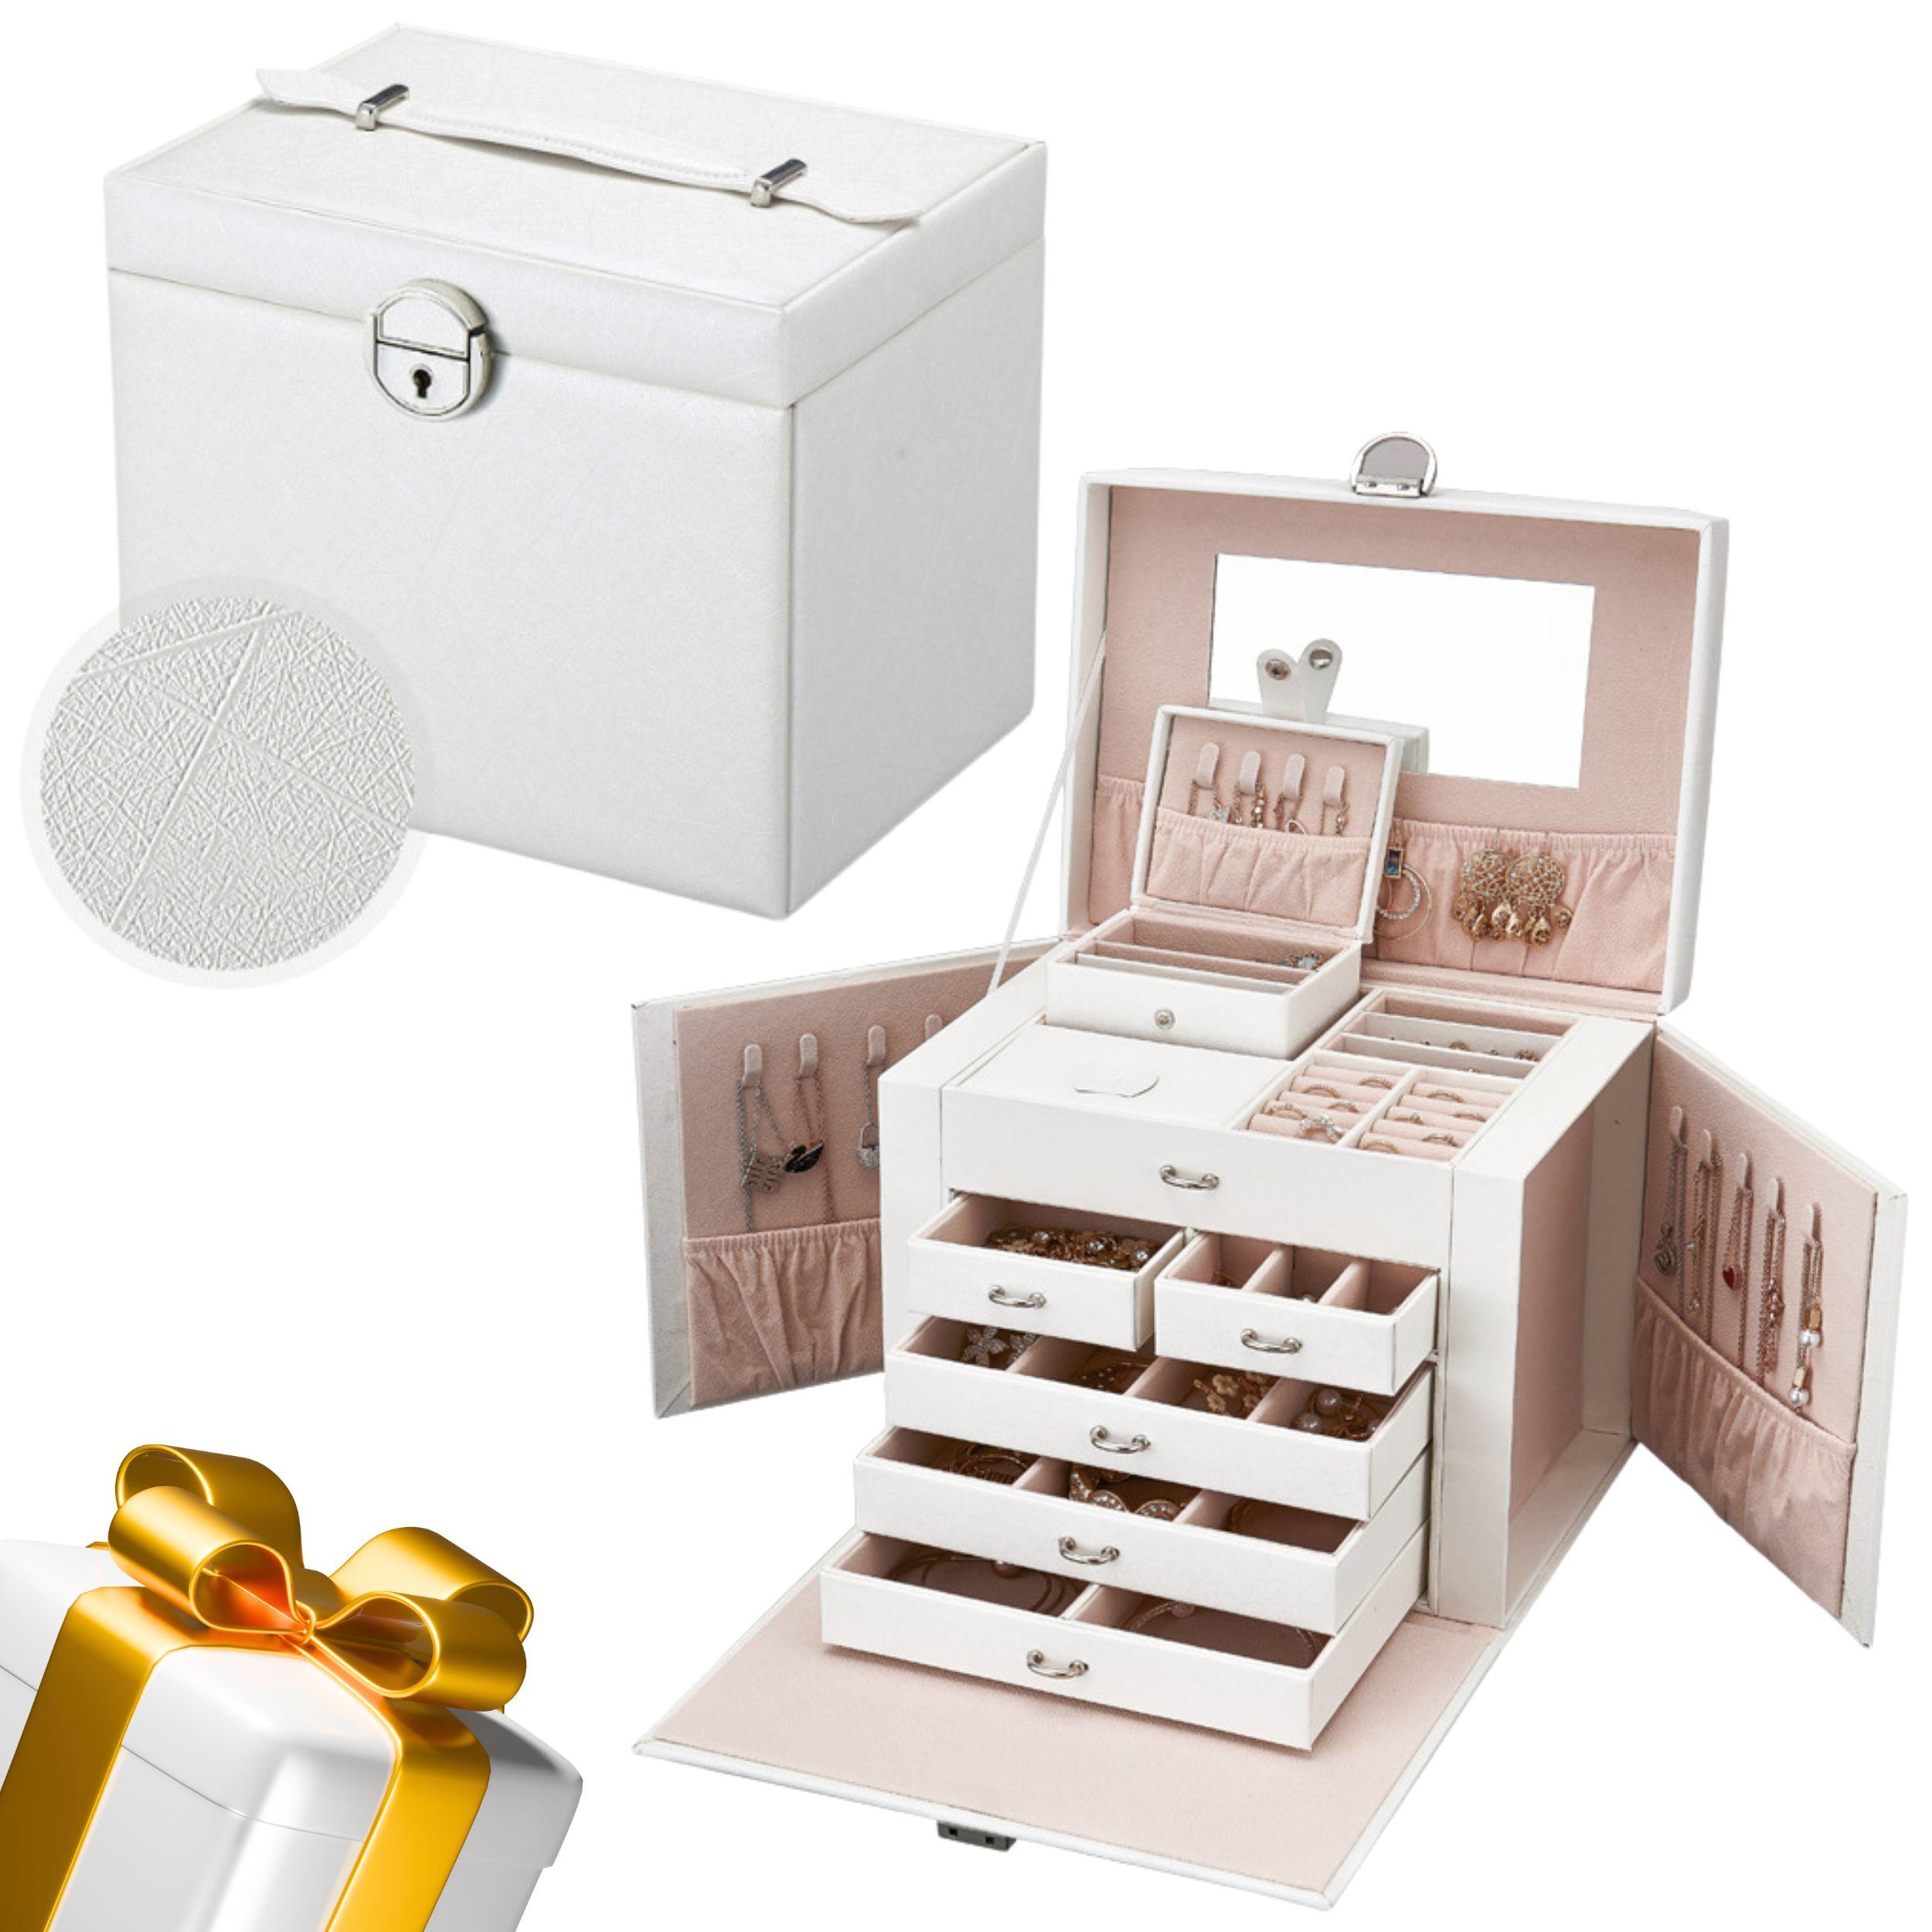 A multi-level casket, a jewelery box - white